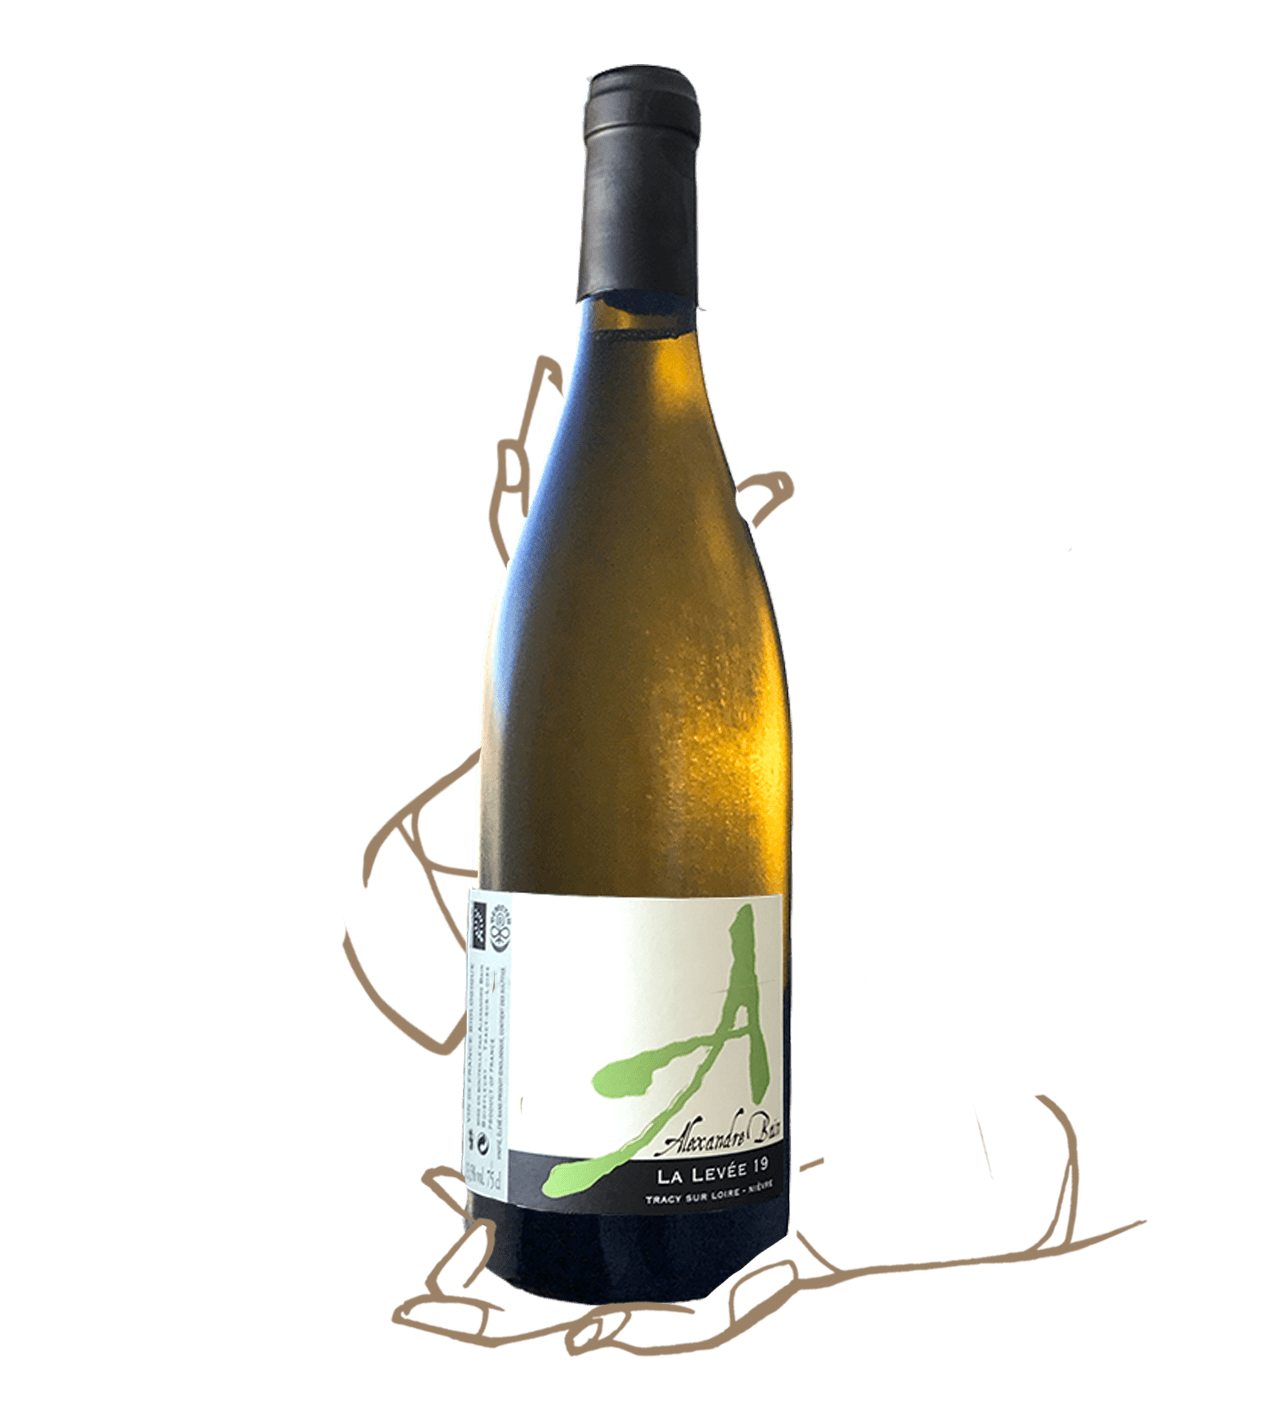 La levée 2019 by Alexandre Bain, natural wine from Loire